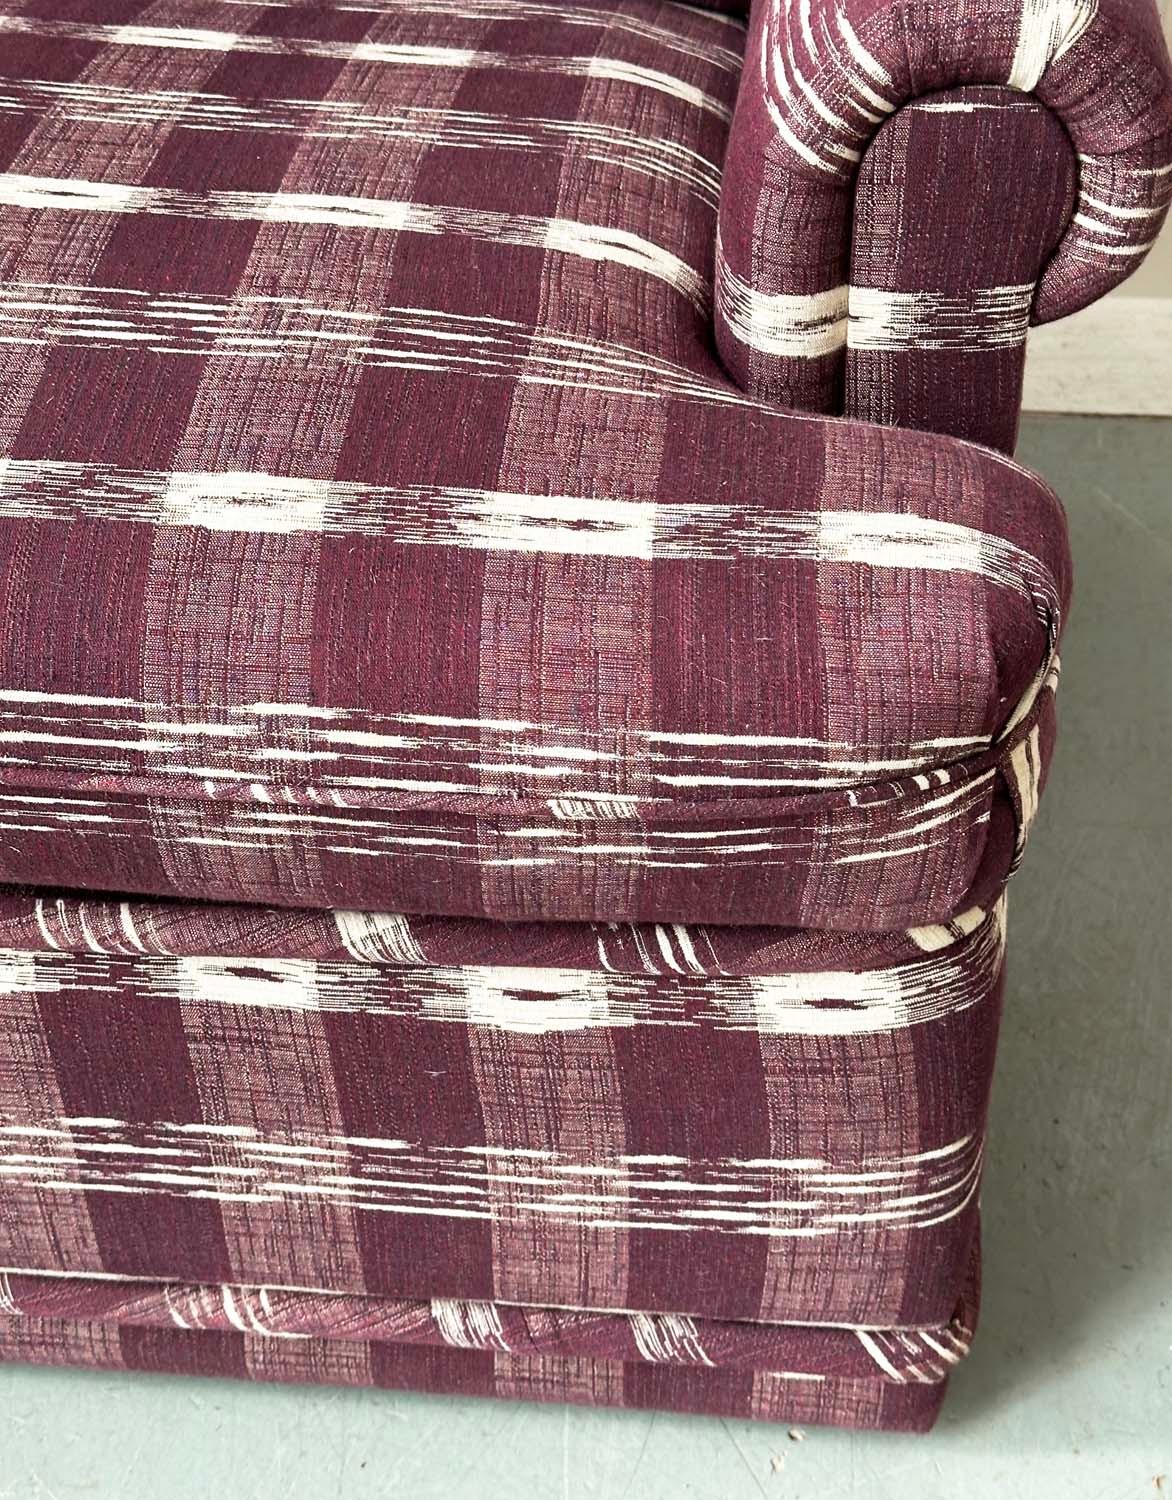 SOFA, Swedish check purple/white upholstery with scroll arms, 203cm W. - Bild 6 aus 18